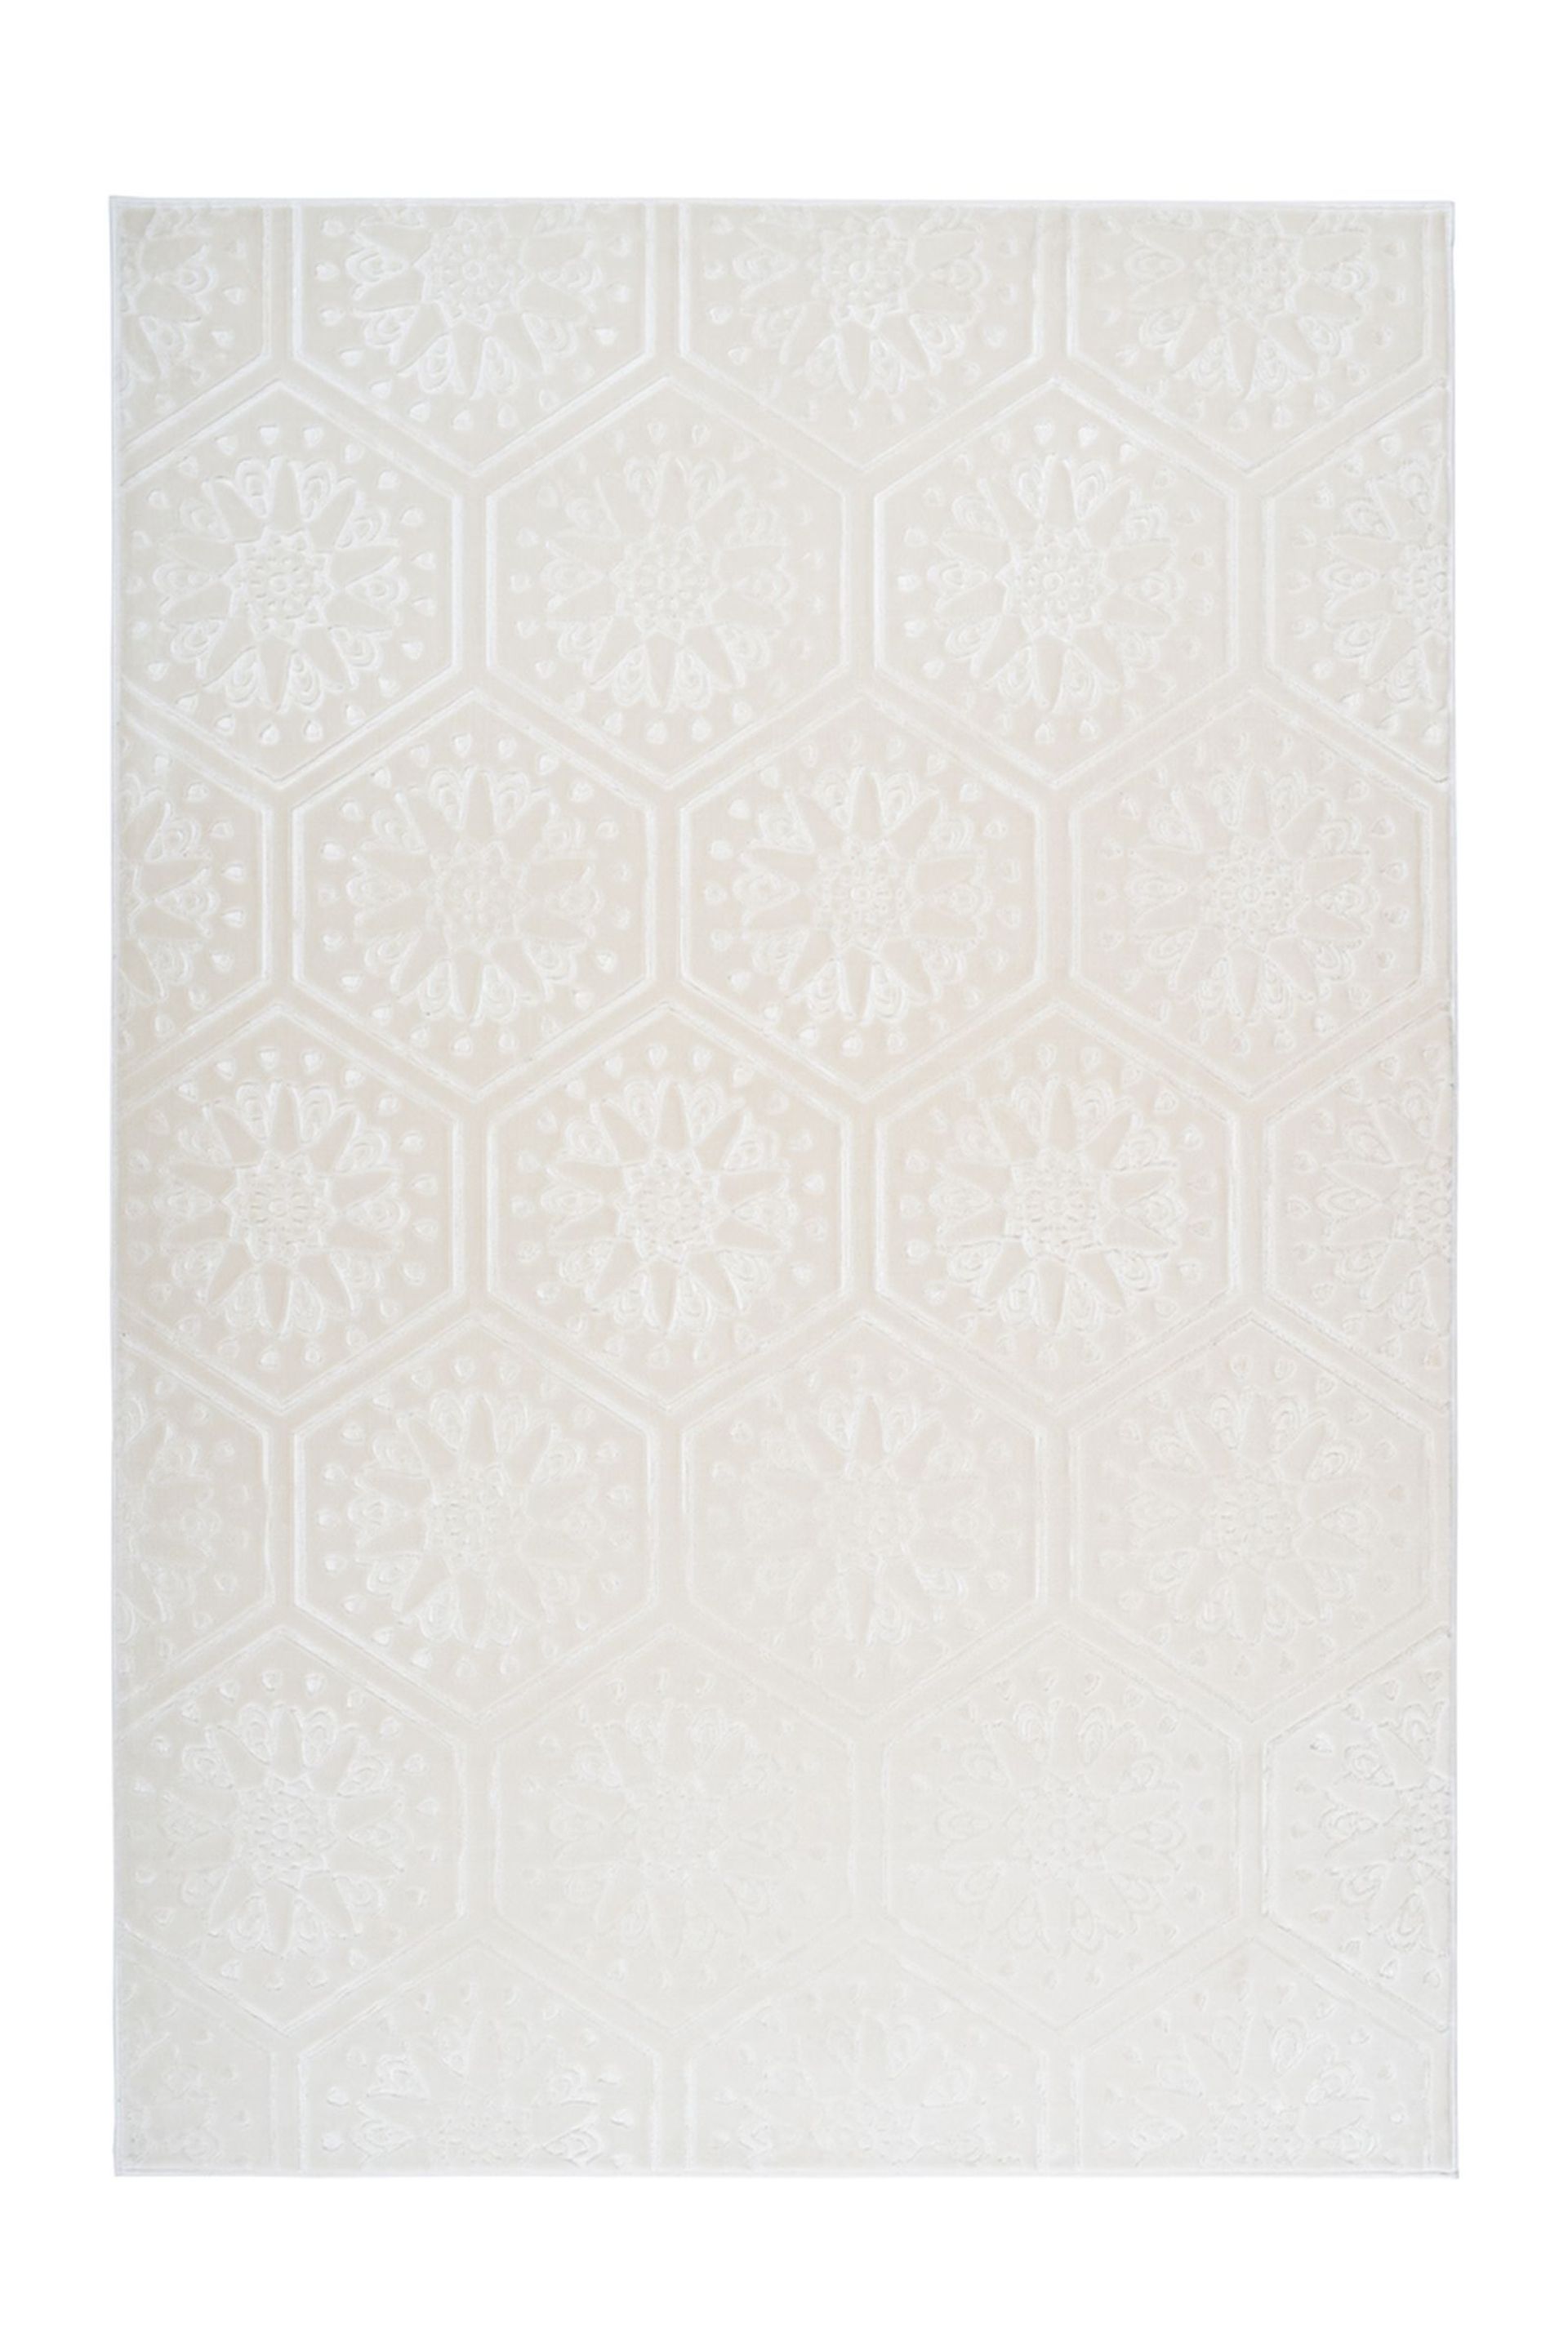 Teppich Monroe 200 Weiß 80 cm x 300 cm